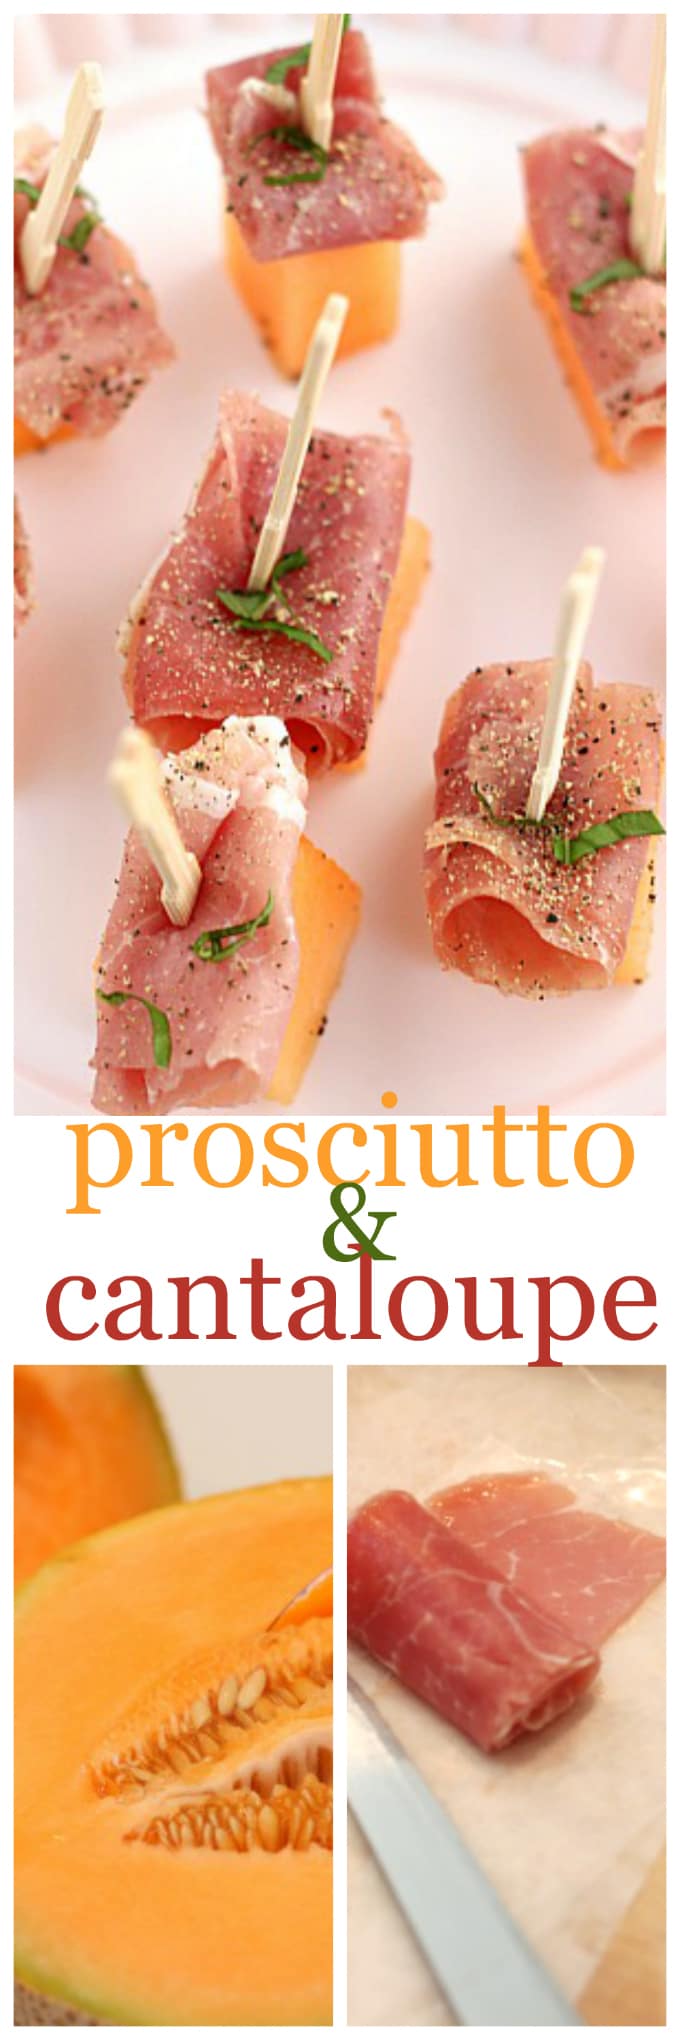 prosciutto and cantaloupe @createdbydiane